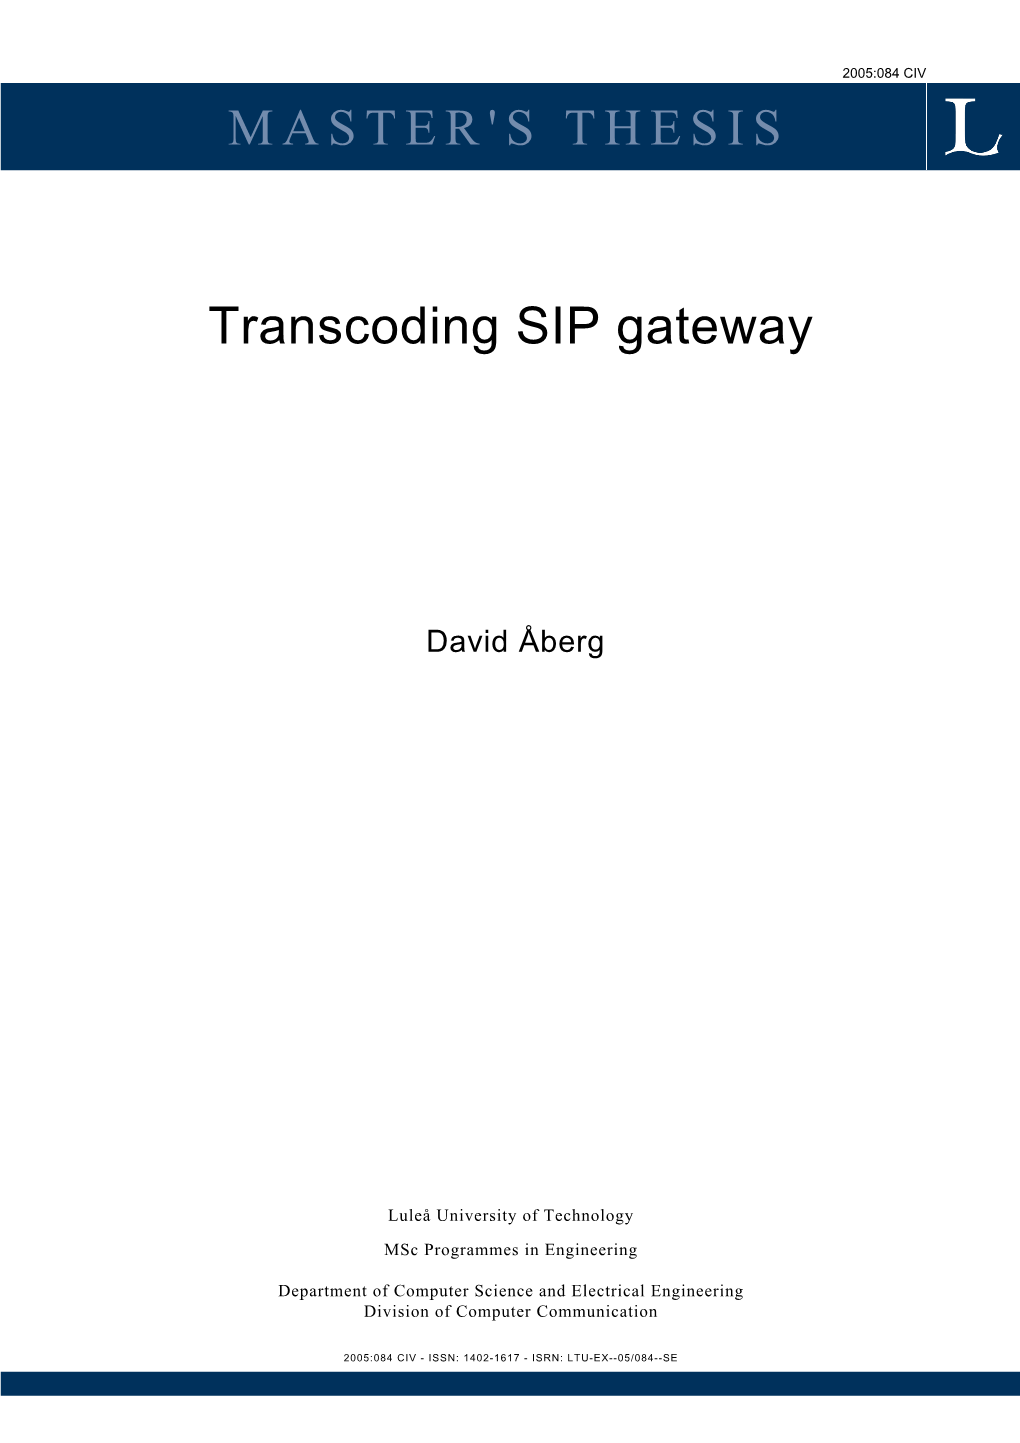 Transcoding SIP Gateway